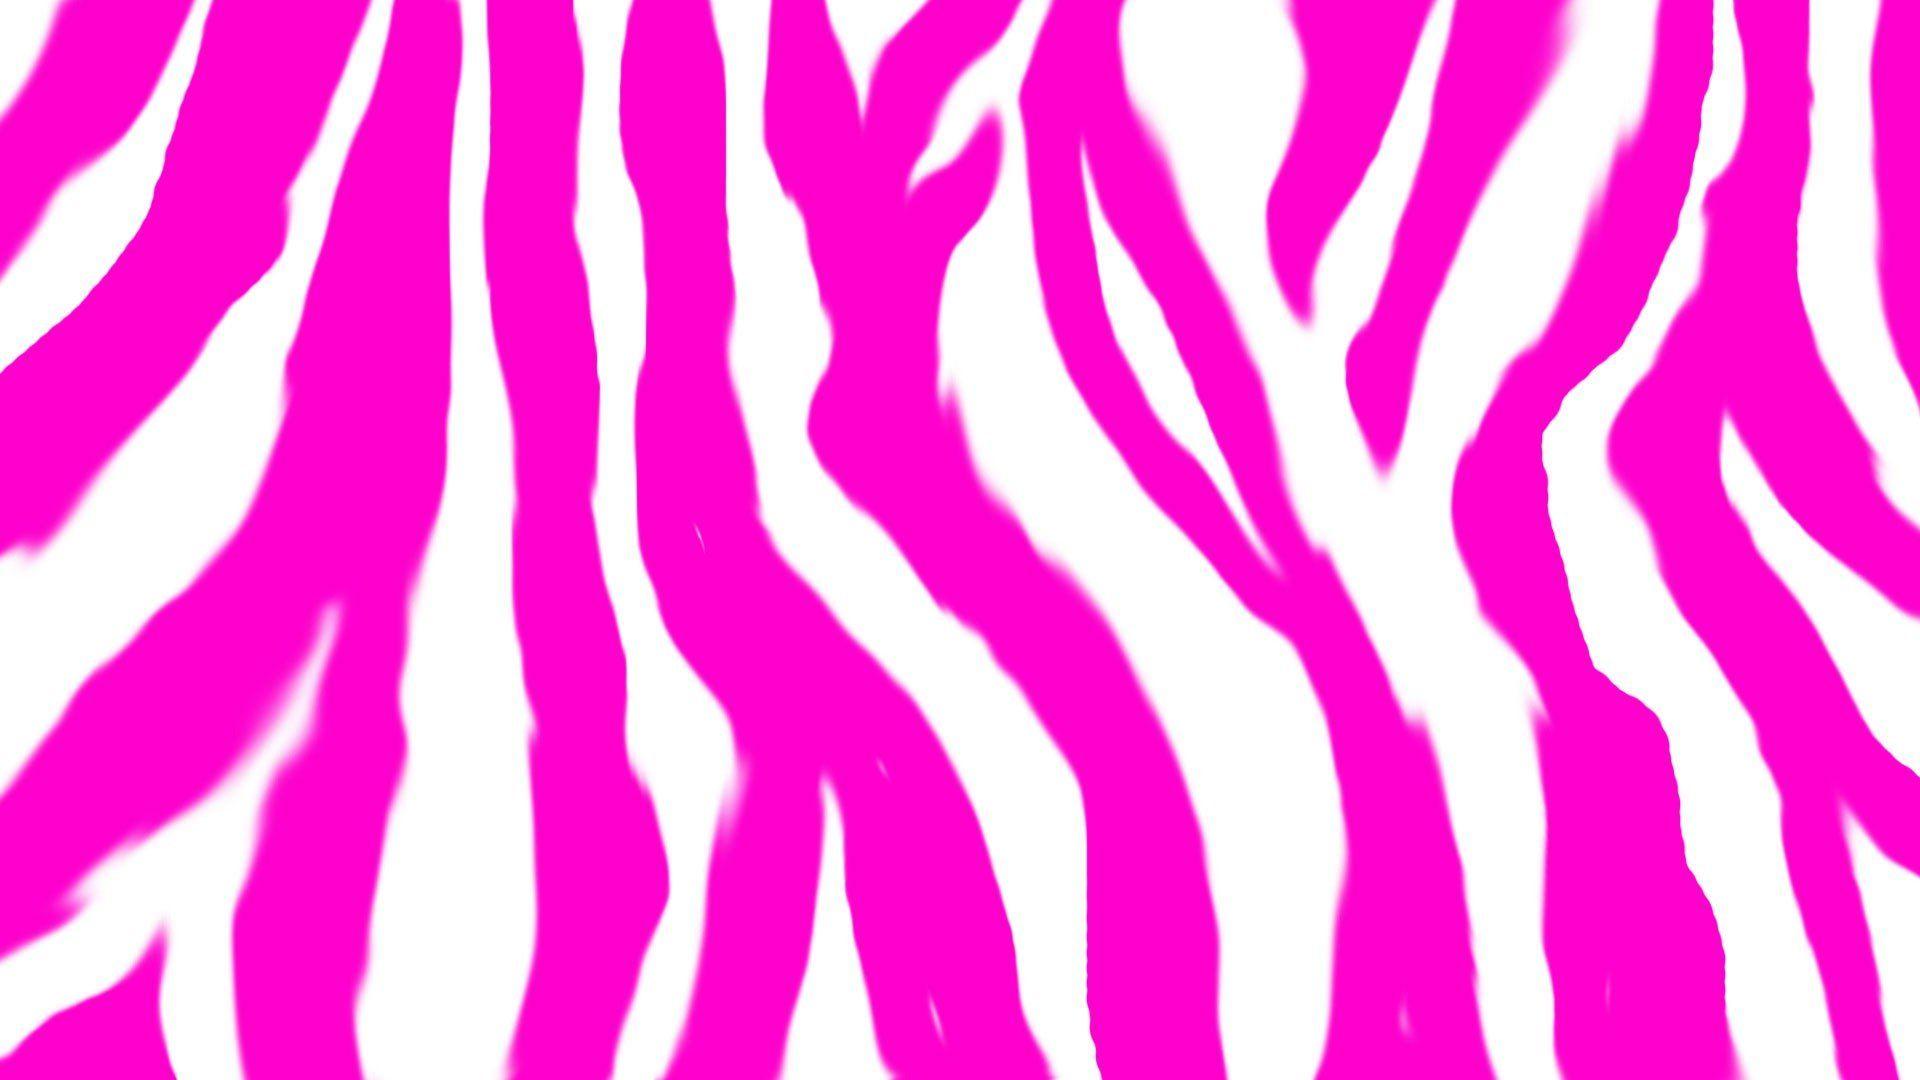 Pink Zebra Pattern 372612